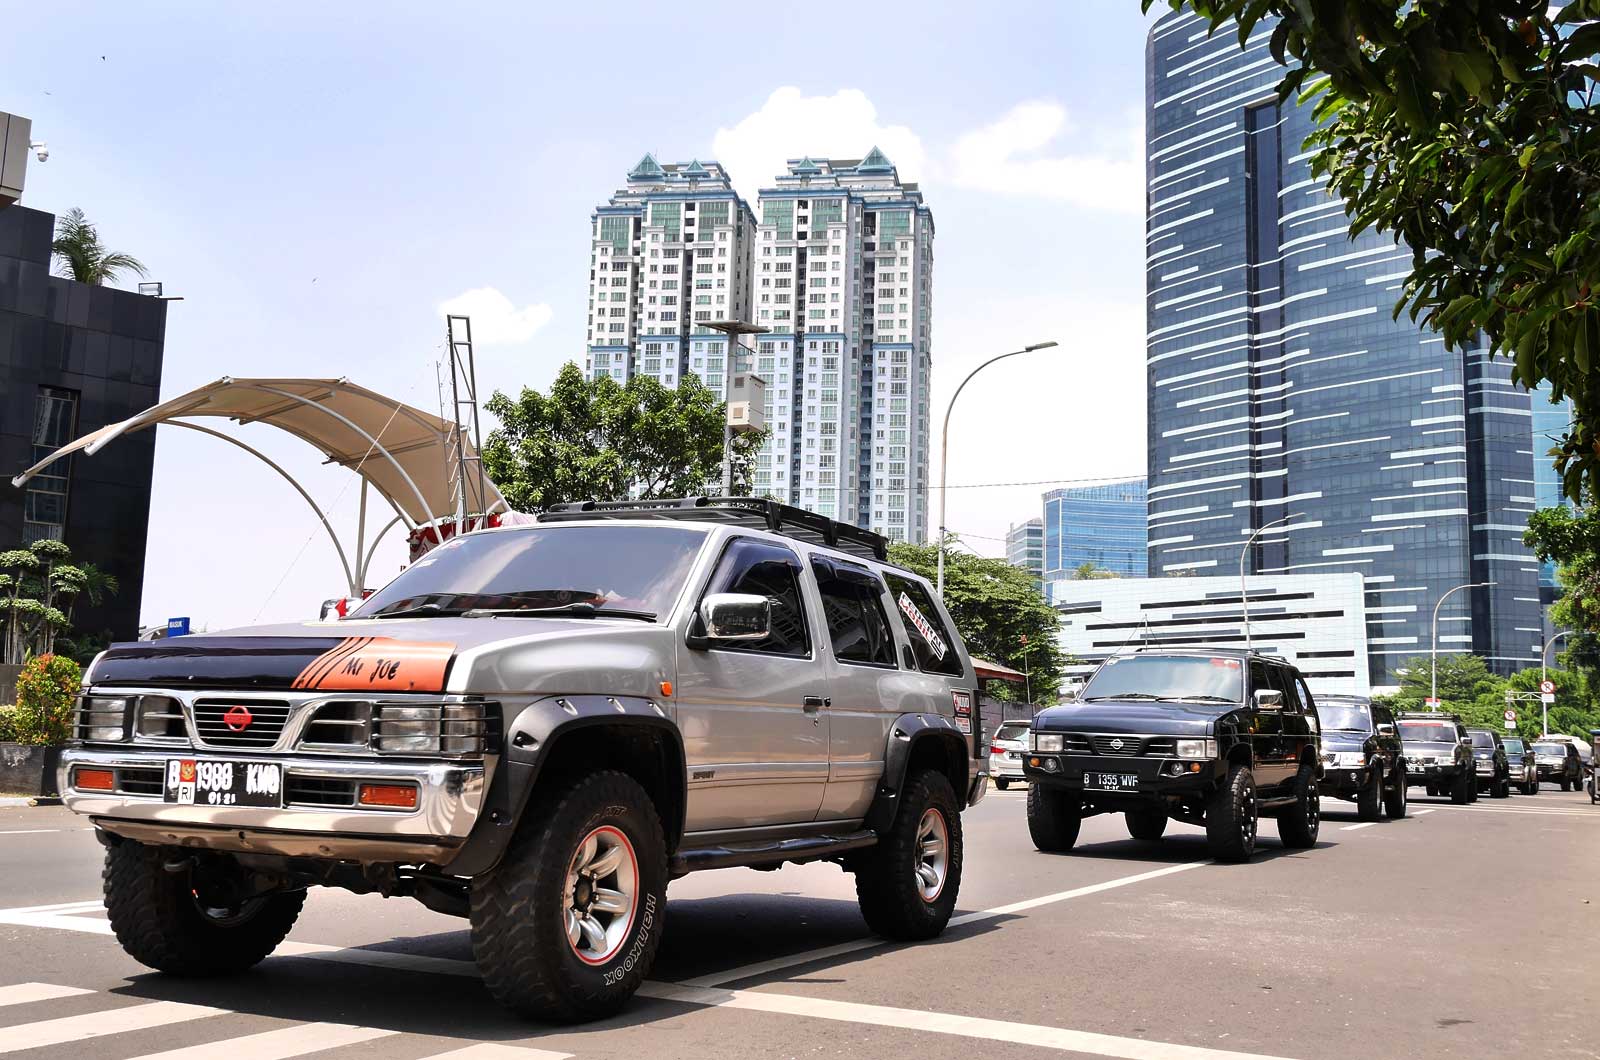 Bengkel Toko Terrano Club Indonesia Sharing Through Driving